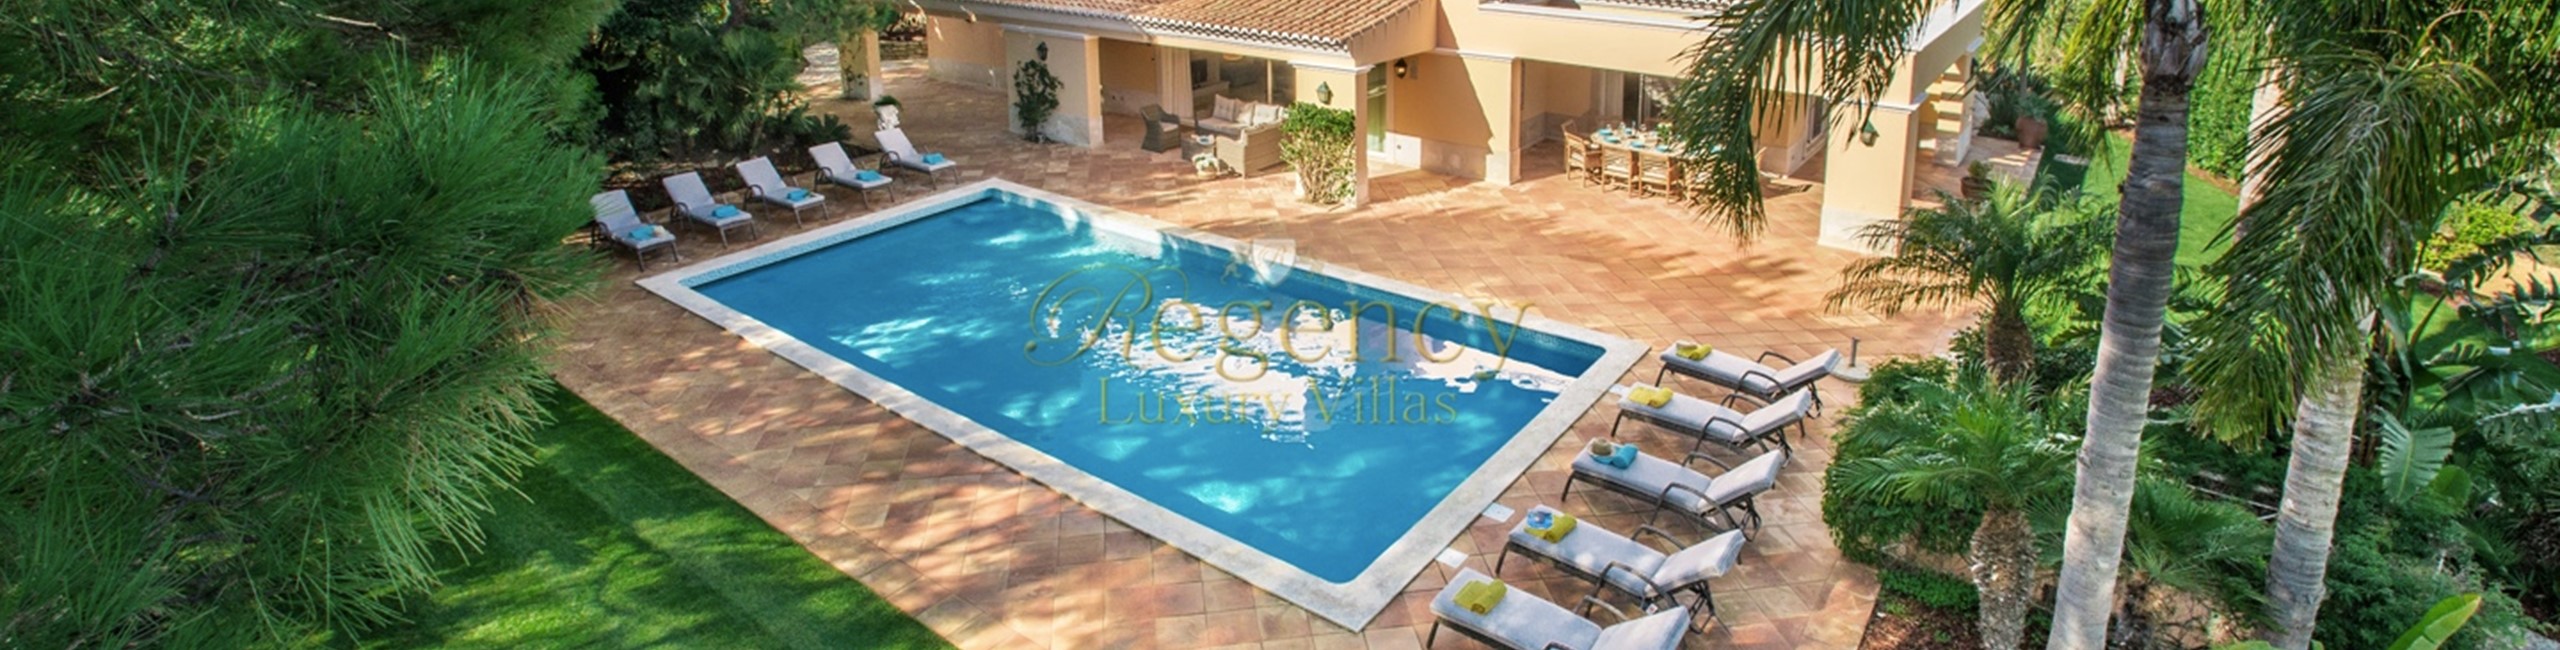 5 Bedroom Villa To Rent In Quinta Do Lago Algarve